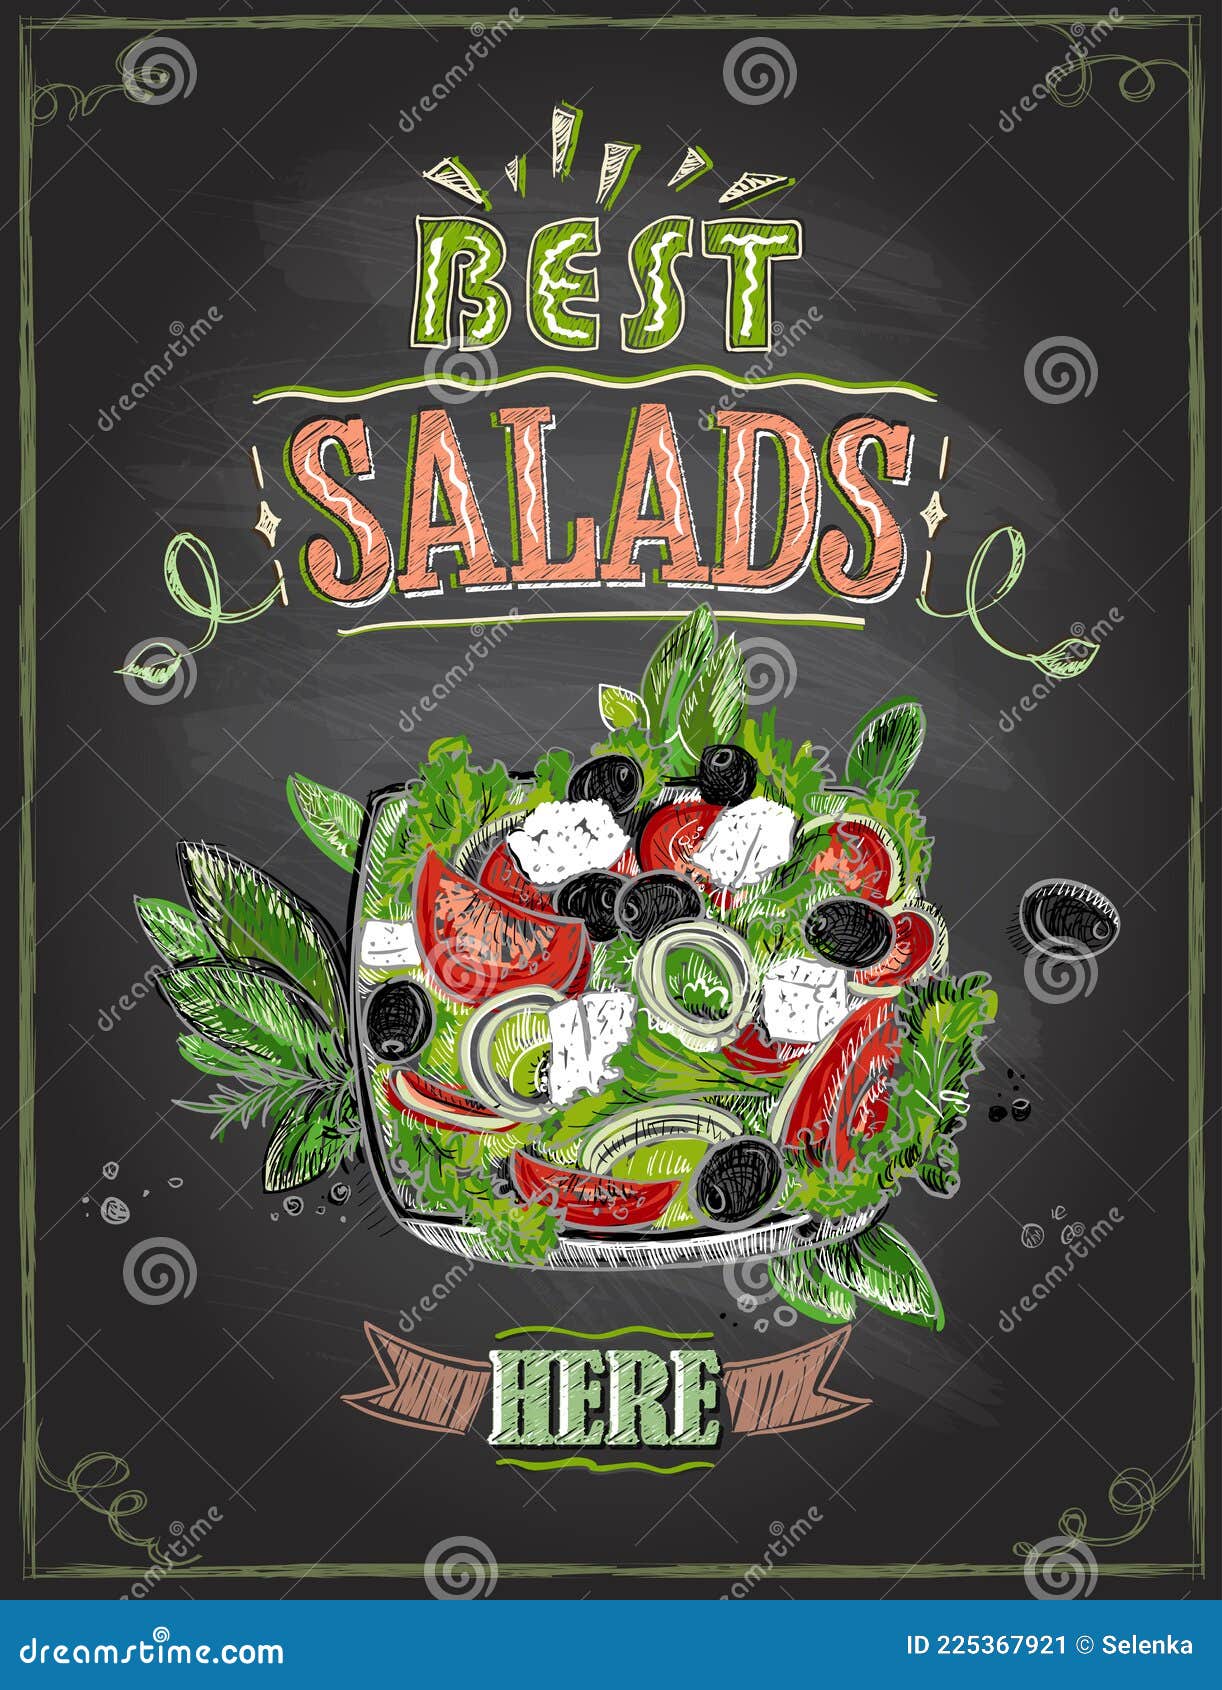 best salads here, chalkboard menu with greek salad